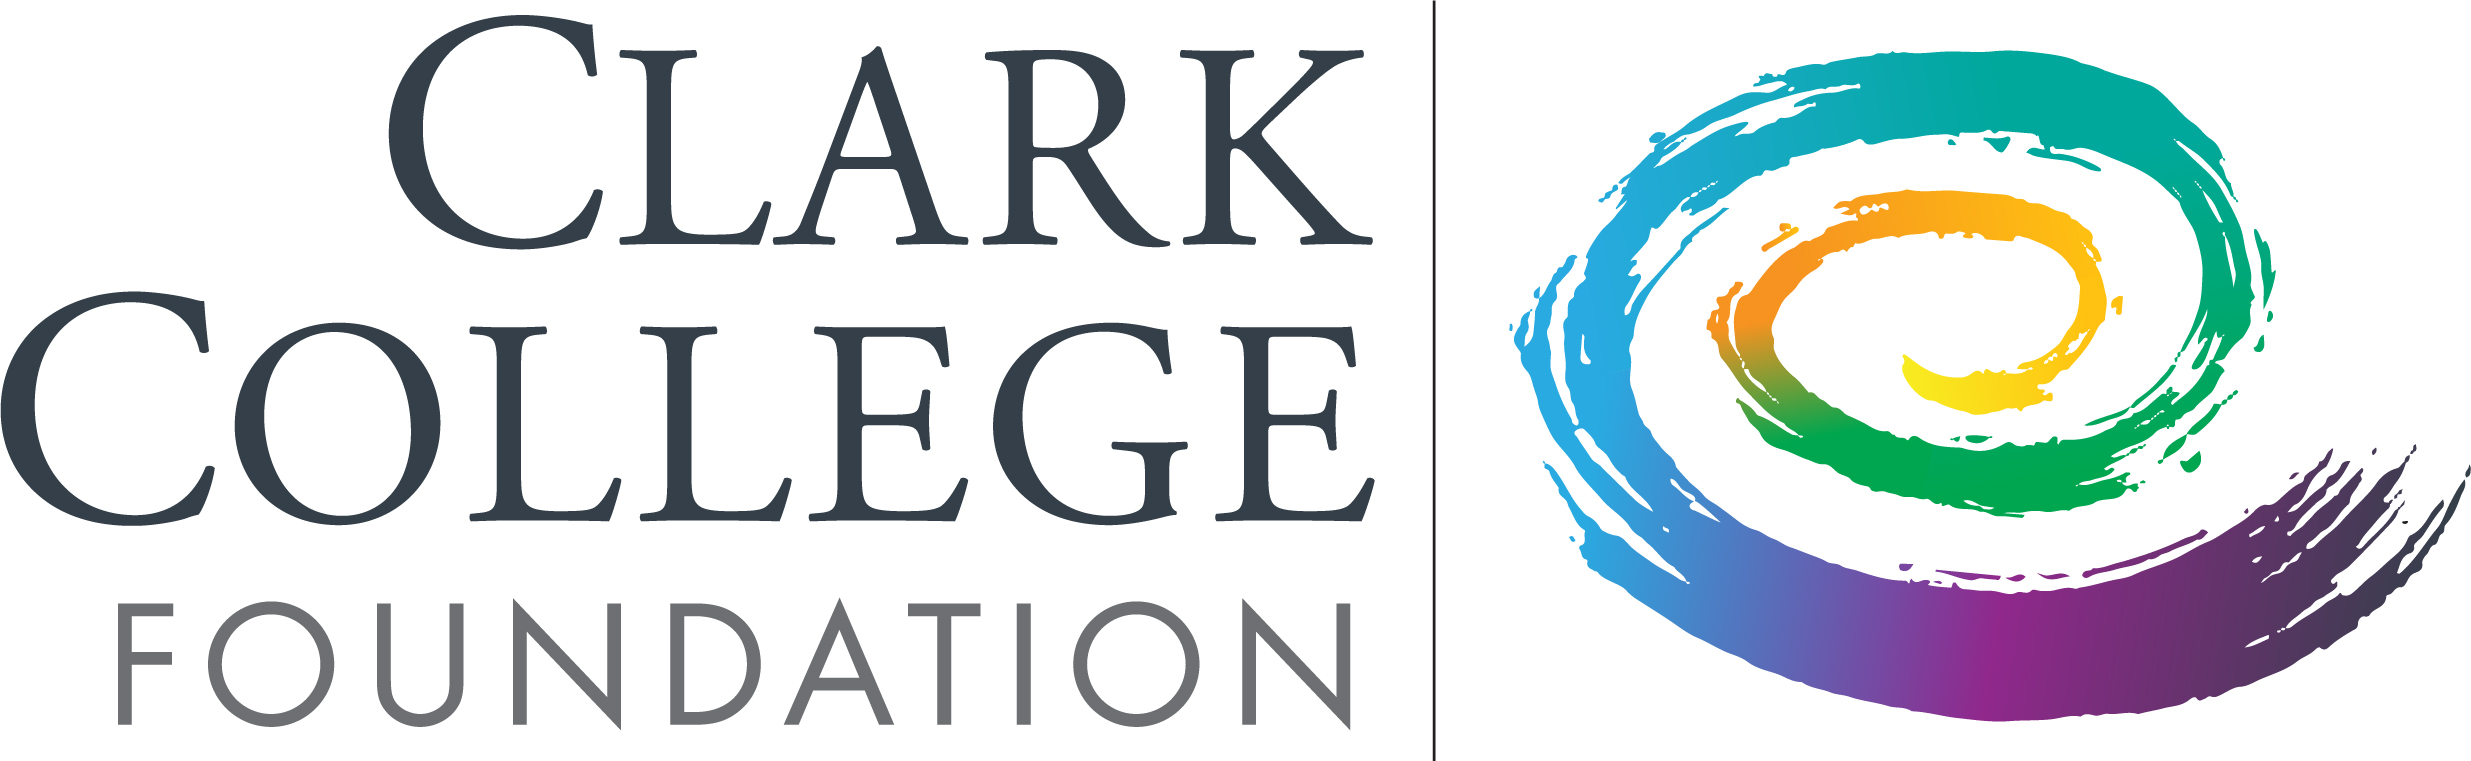 Clark College Foundation's logo